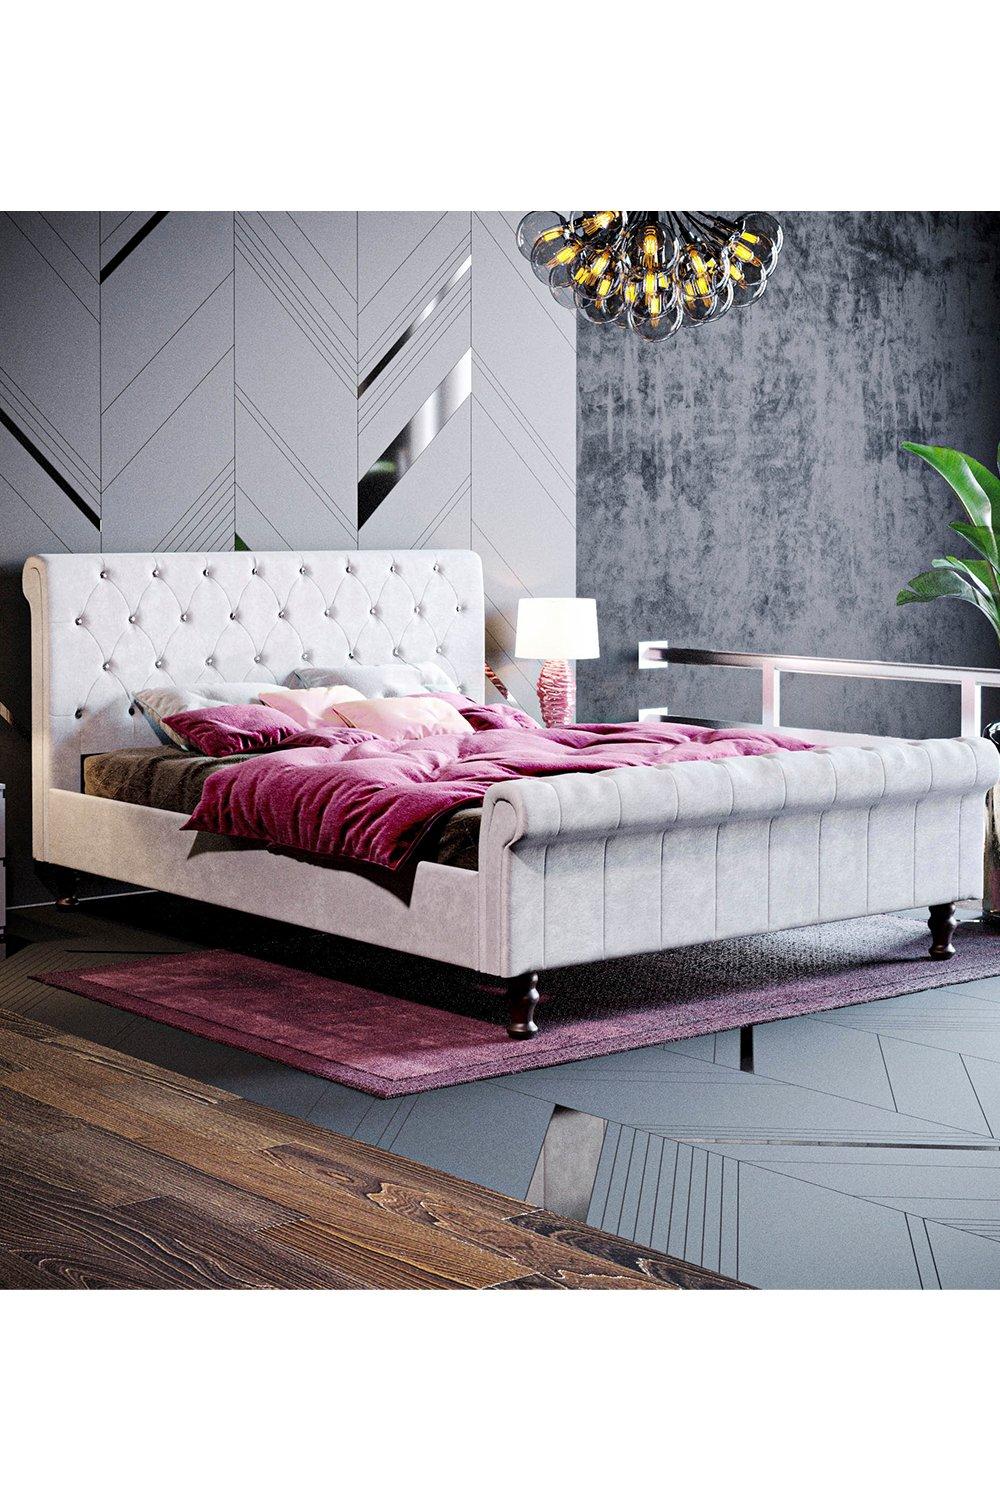 Vida Designs Violetta King Size Bed Frame Velvet Fabric 1150 x 1600 x 2320 mm